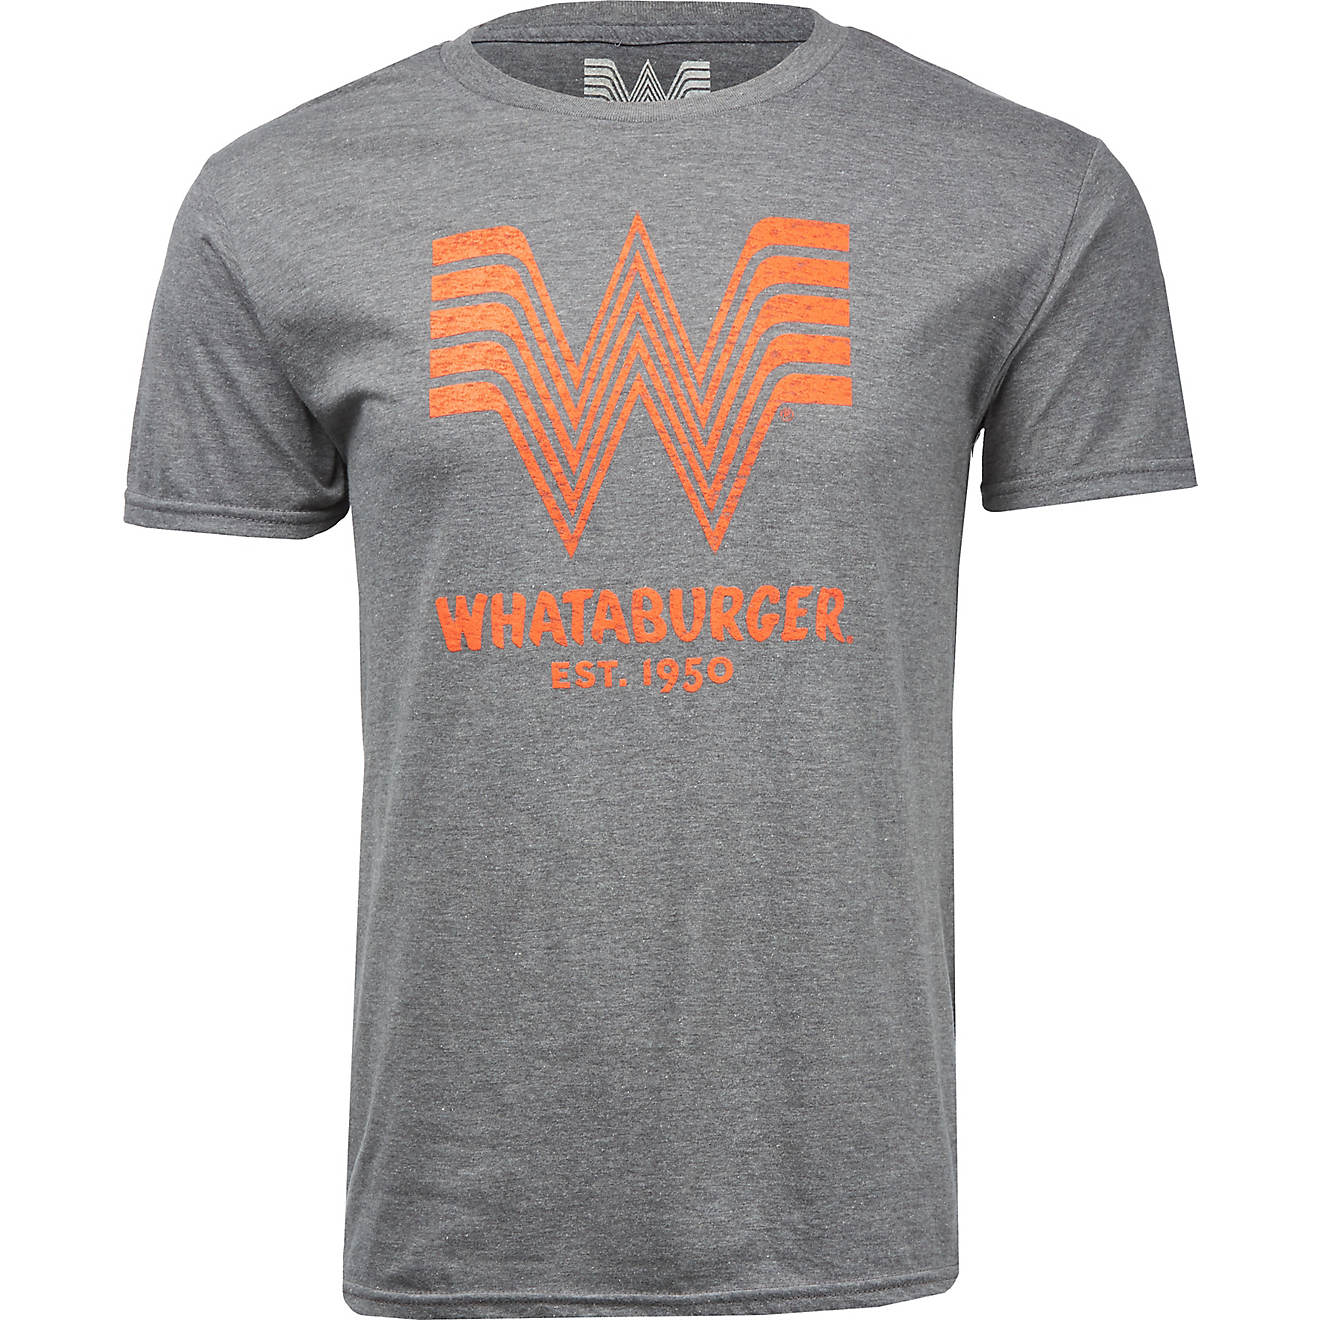 Whataburger Men's Graphic T-shirt